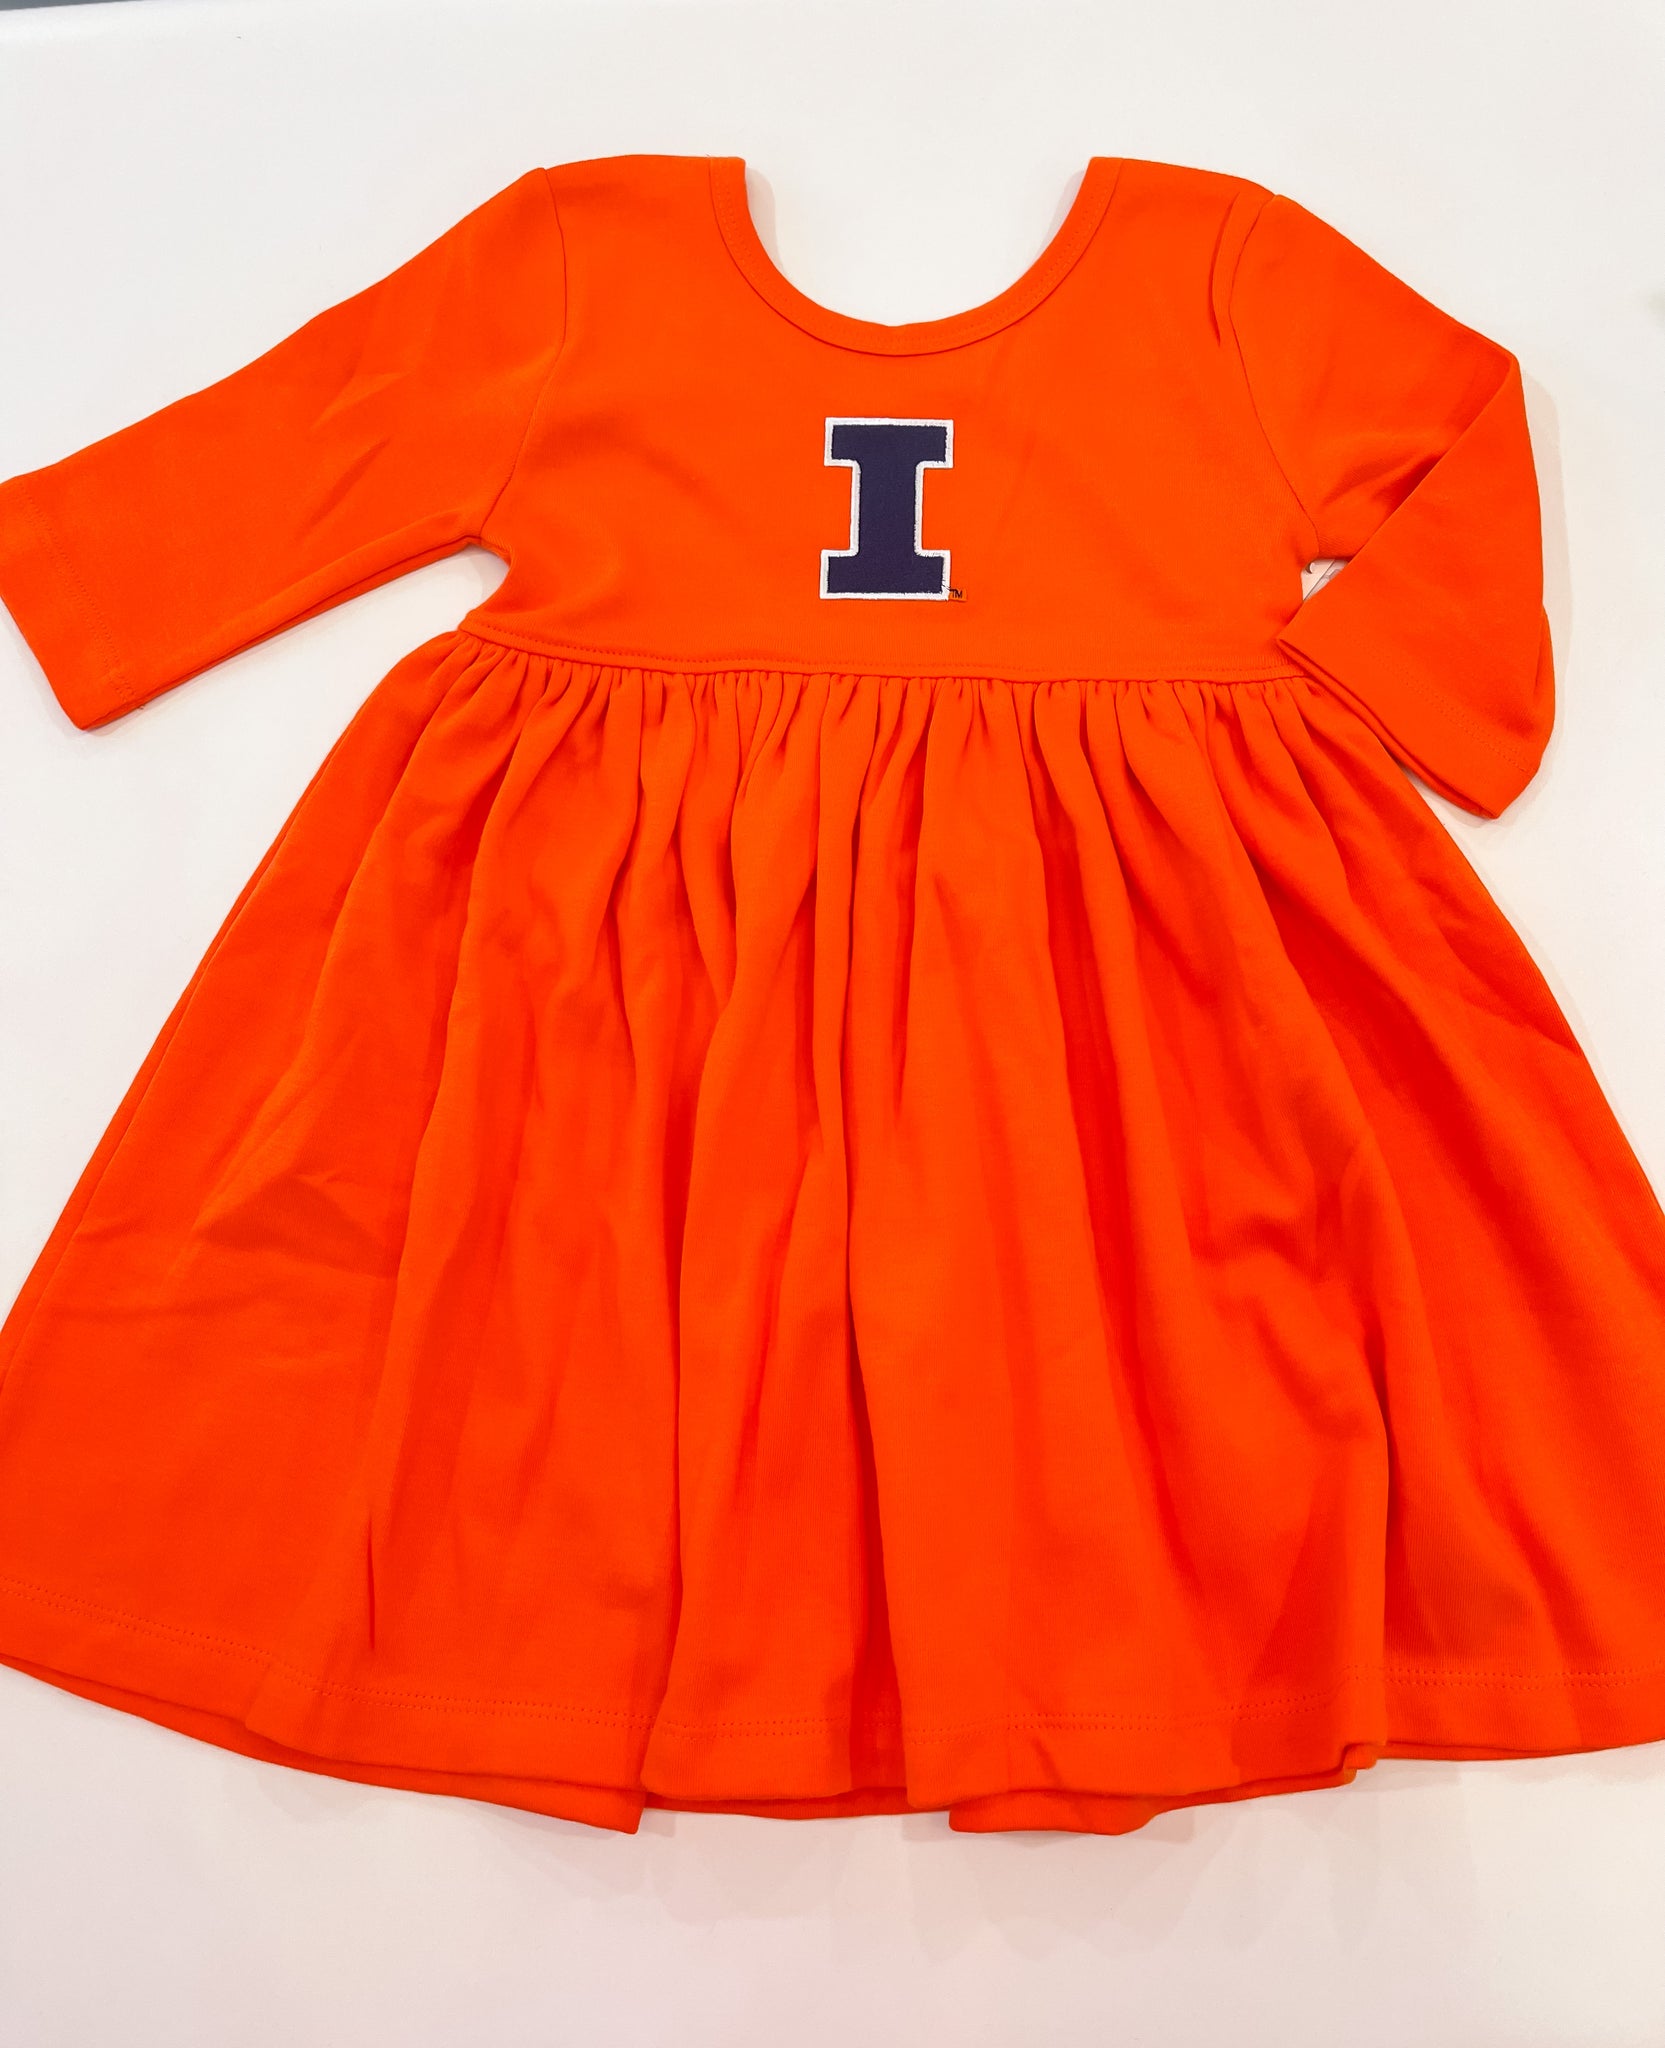 Illini Spin Dress - Orange